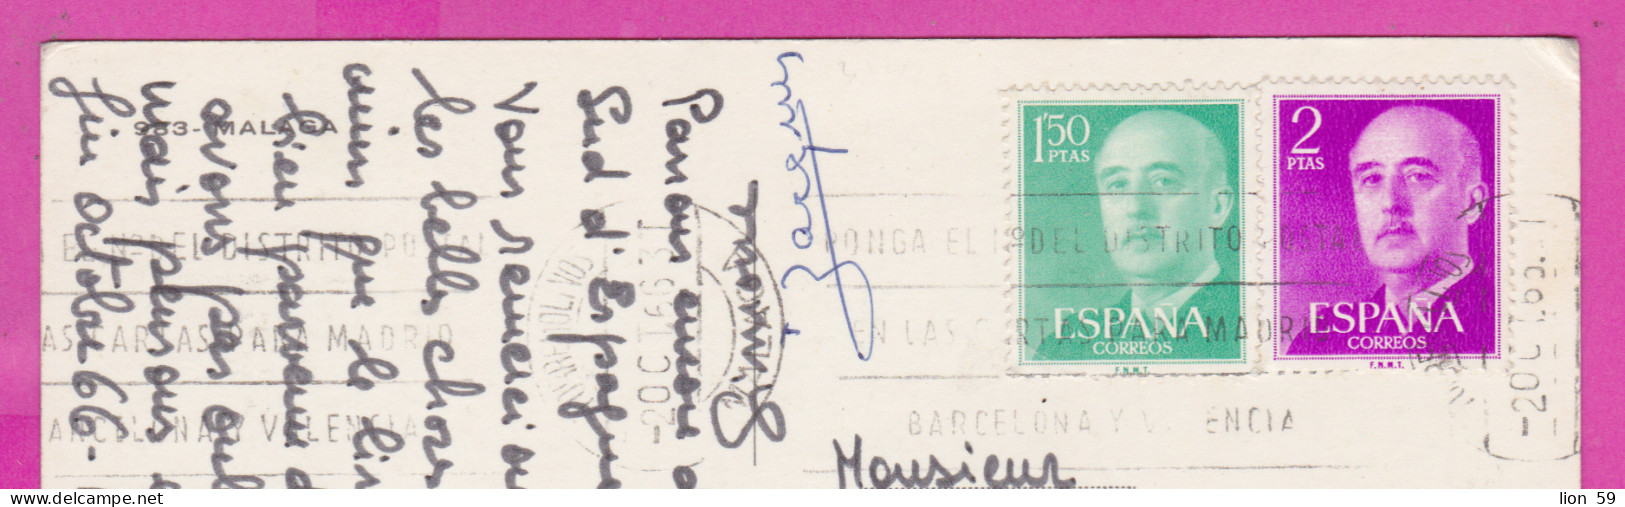 293811 / Spain - Malaga PC 1966 USED 1.50+2 PtaGeneral Francisco Franco Flamme " PONGA No. DISTRITO POSTAL.... - Covers & Documents